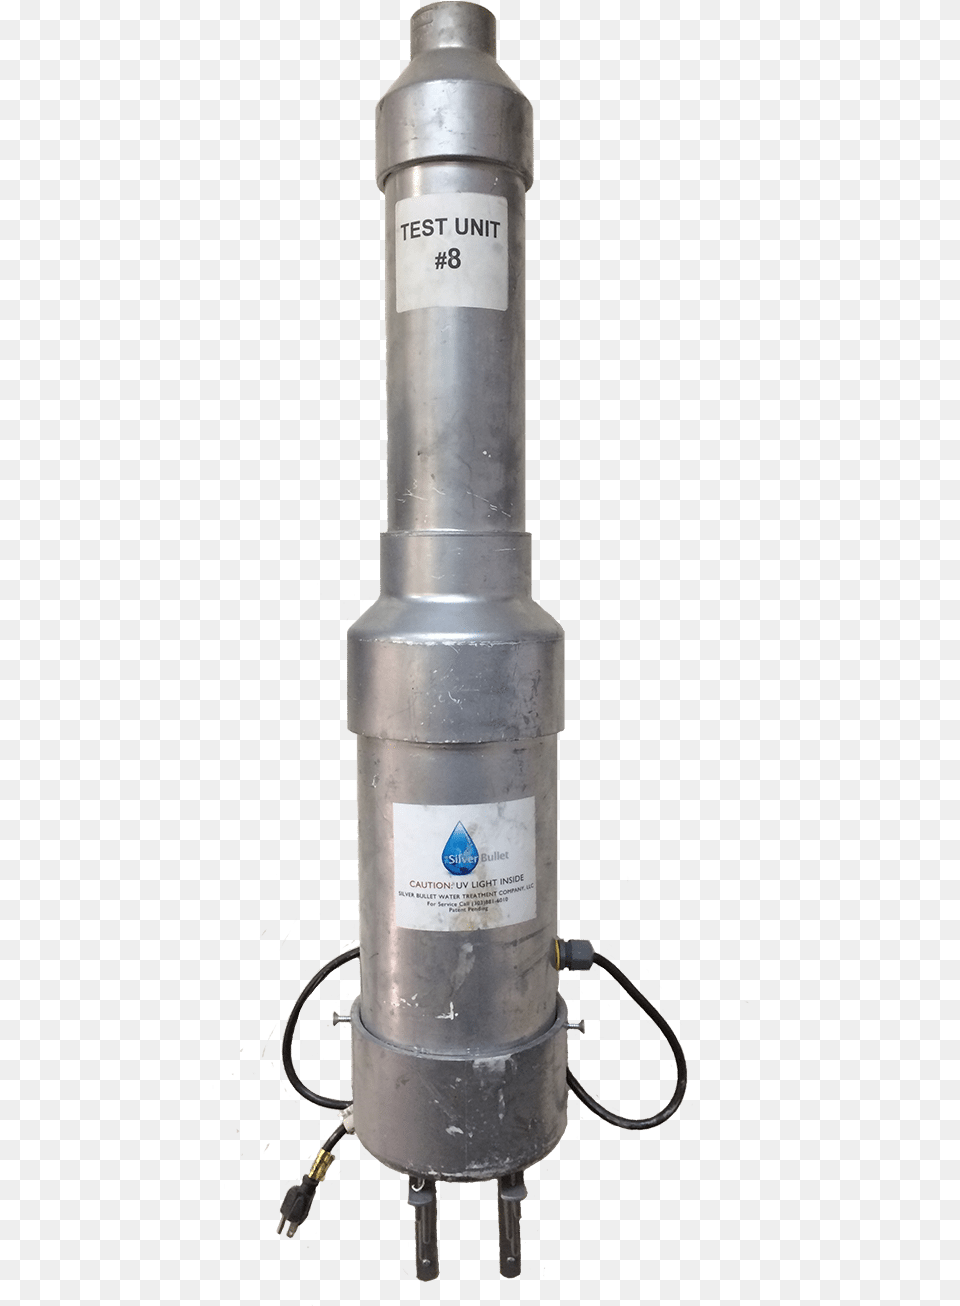 Silver Bullet Aop System Prototype Machine, Pump, Bottle, Shaker Png